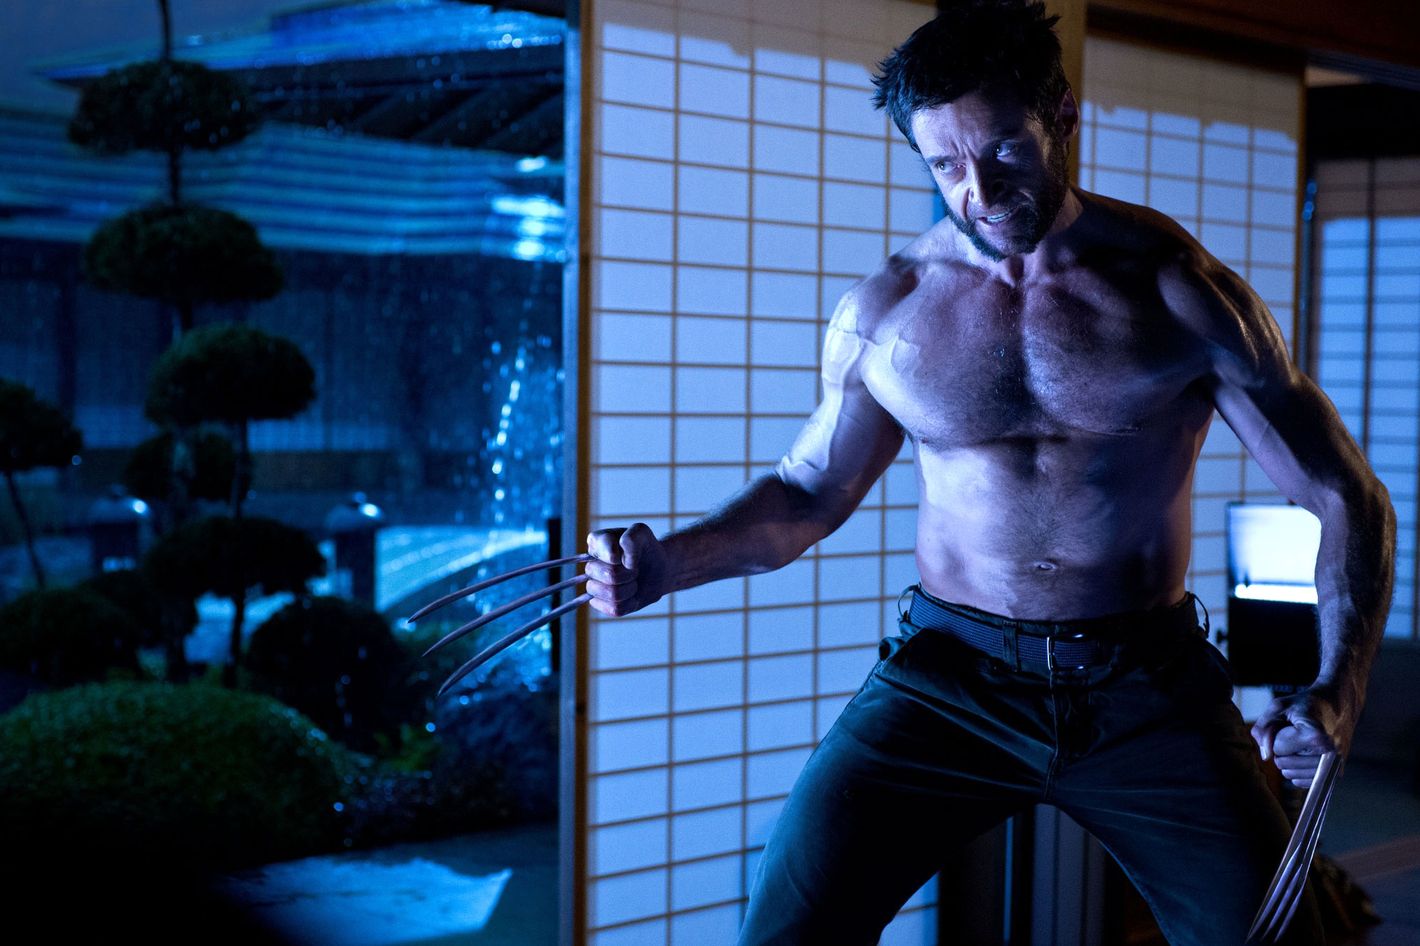 Japanese Schoolgirl Train - Edelstein on The Wolverine: Hugh Jackman's Logan Goes East